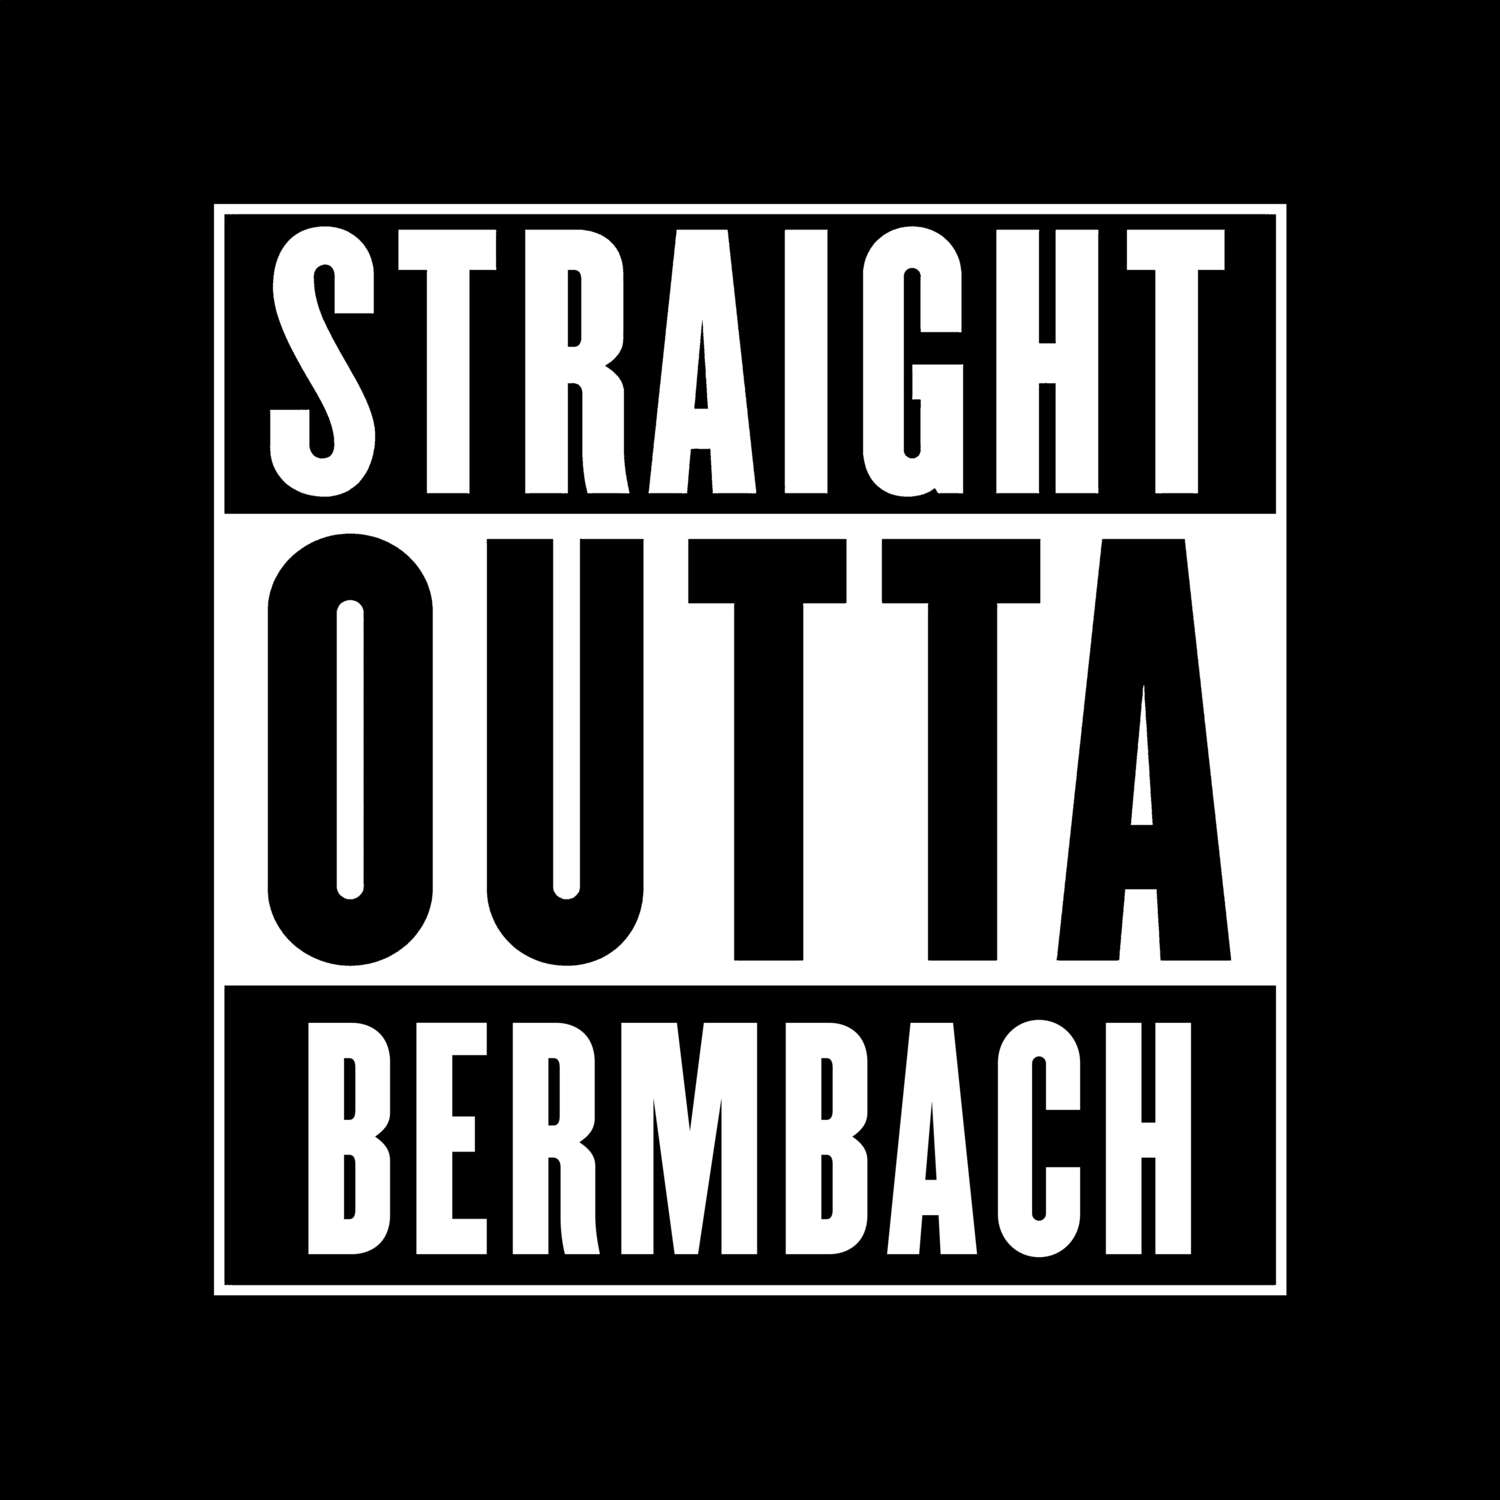 Bermbach T-Shirt »Straight Outta«